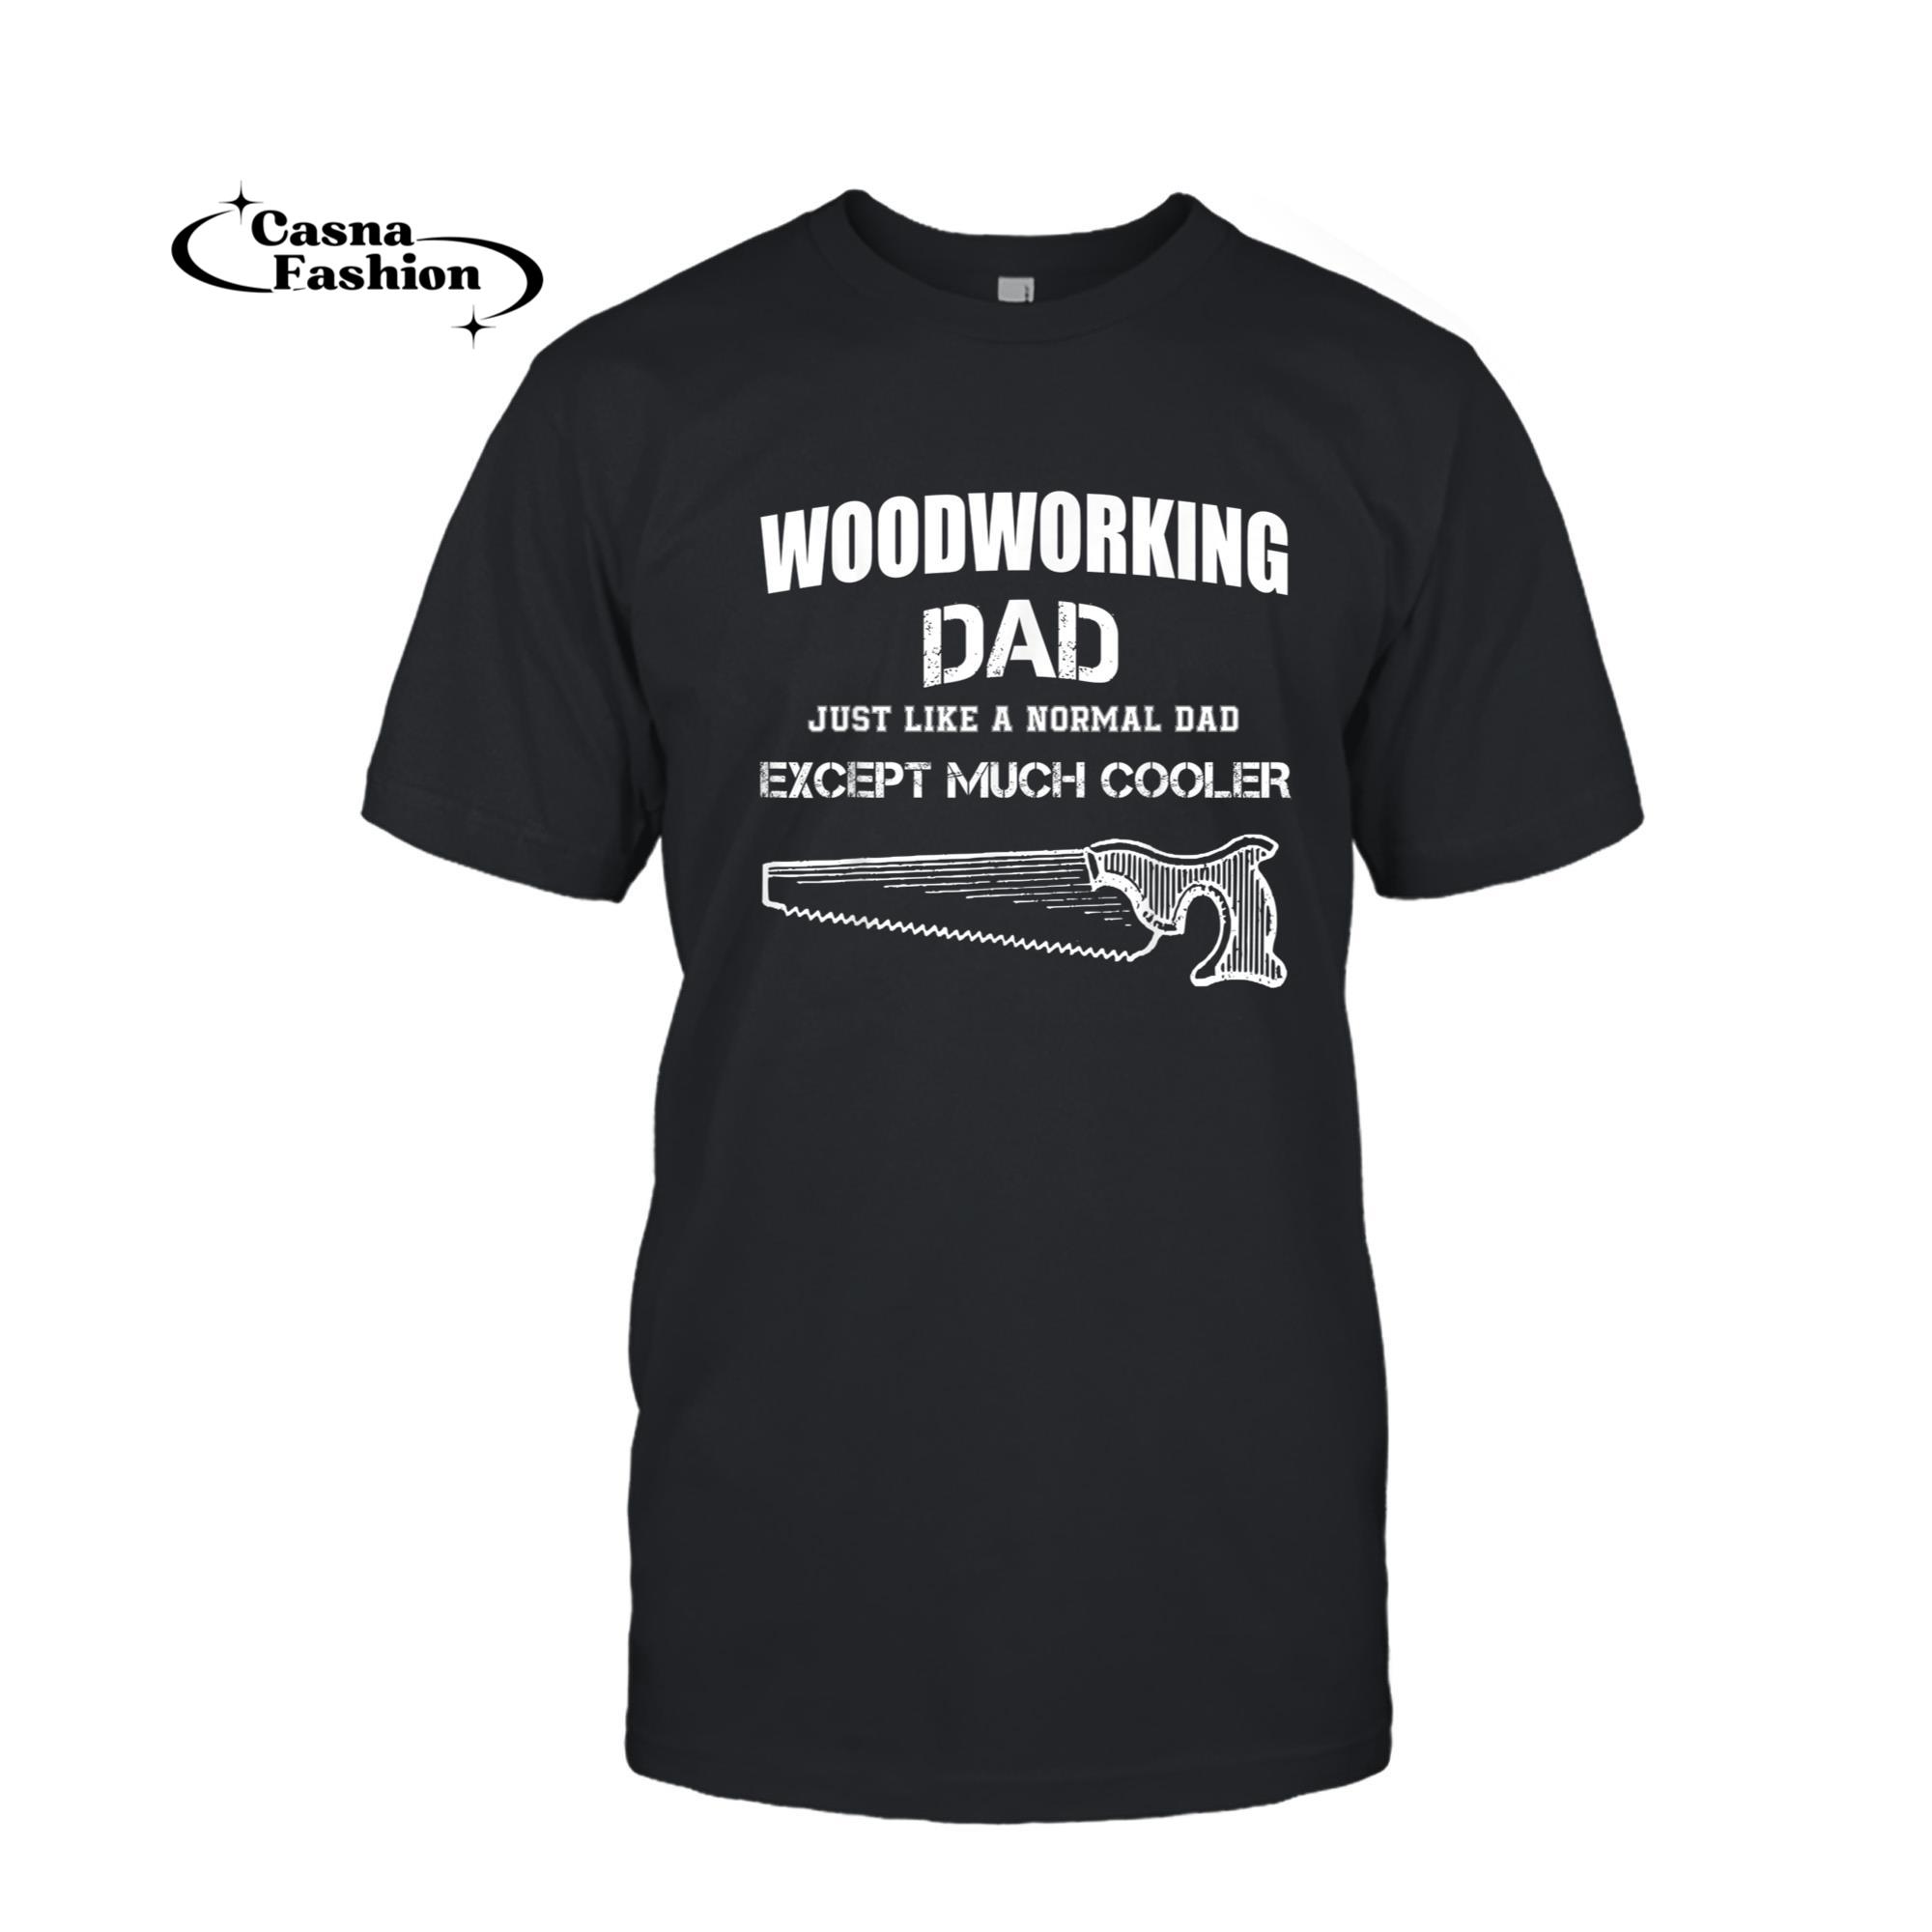 casnafashion_T-shirt_Woodworking Dad Carpenter Dad Craft Gift Idea Tshirt_T-shirt_Black